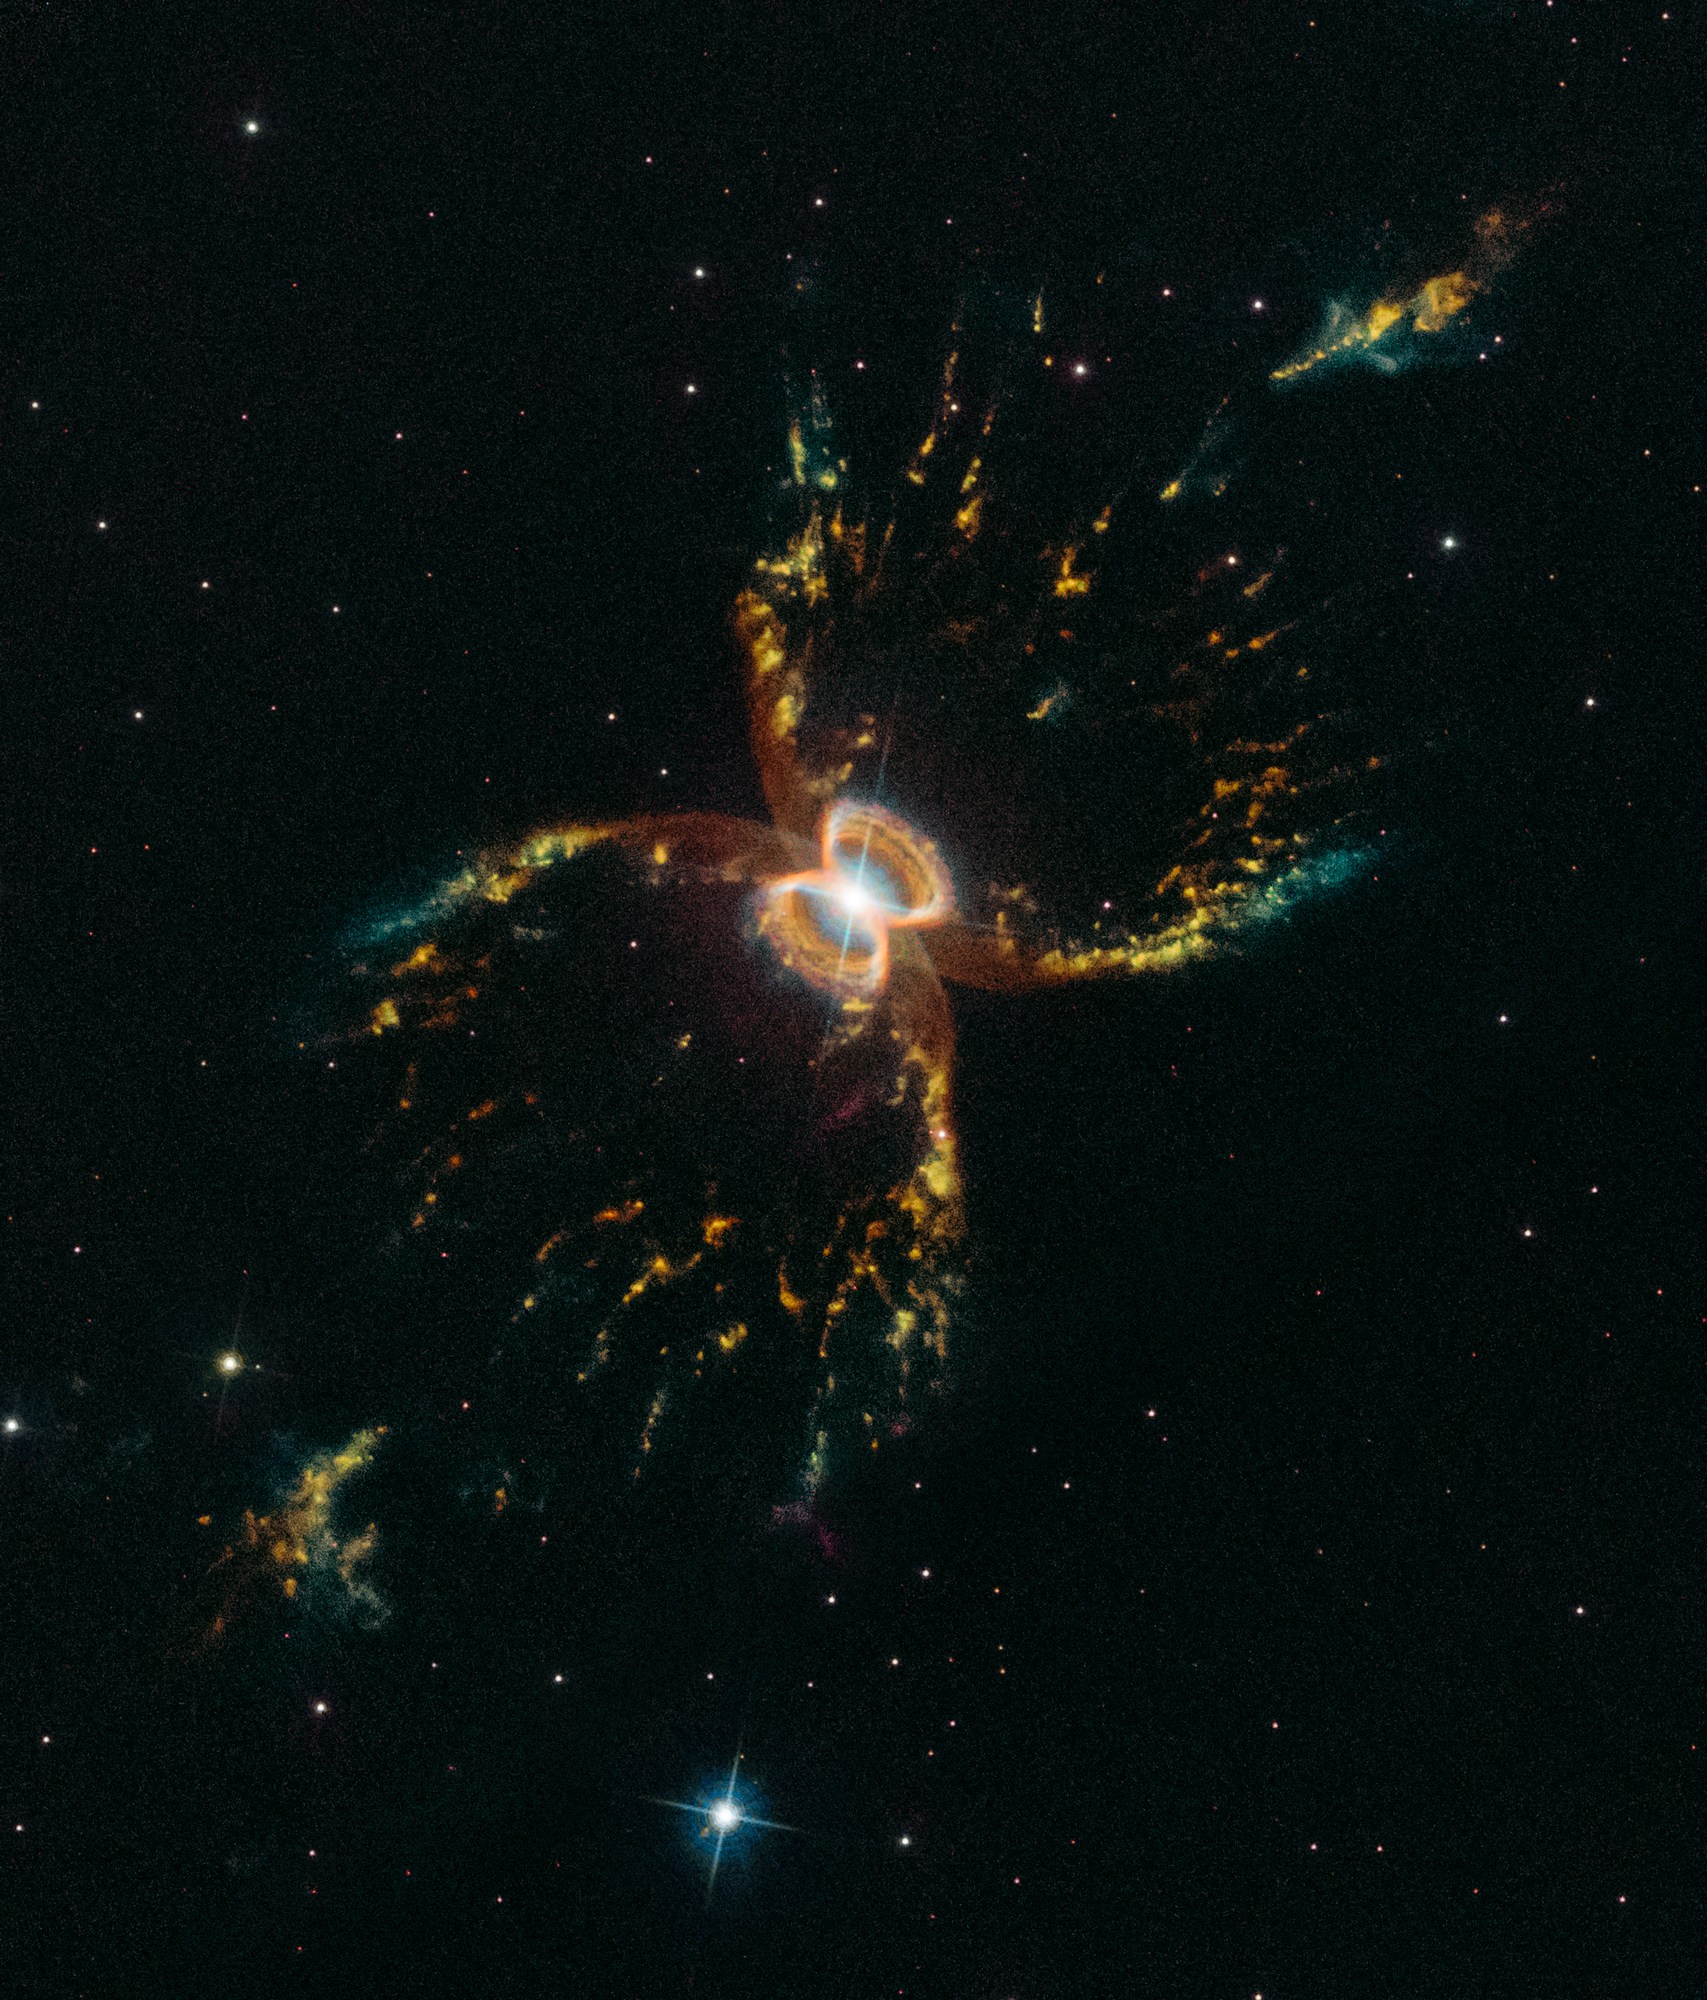 X-shaped nebula in space